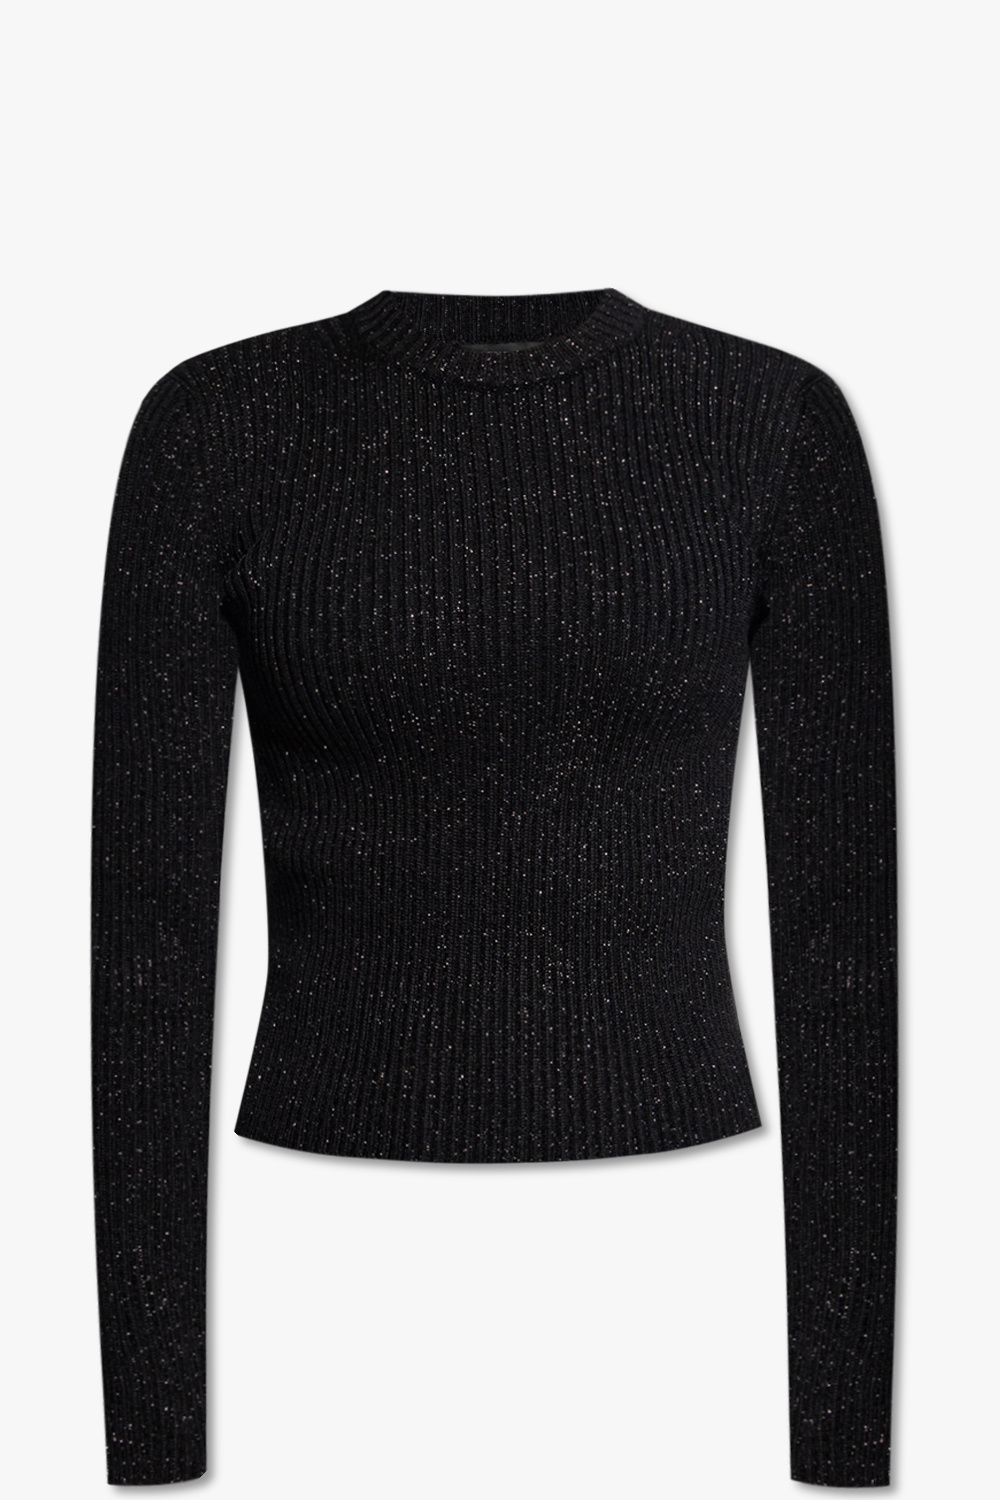 Balenciaga sweater cant with metallic thread